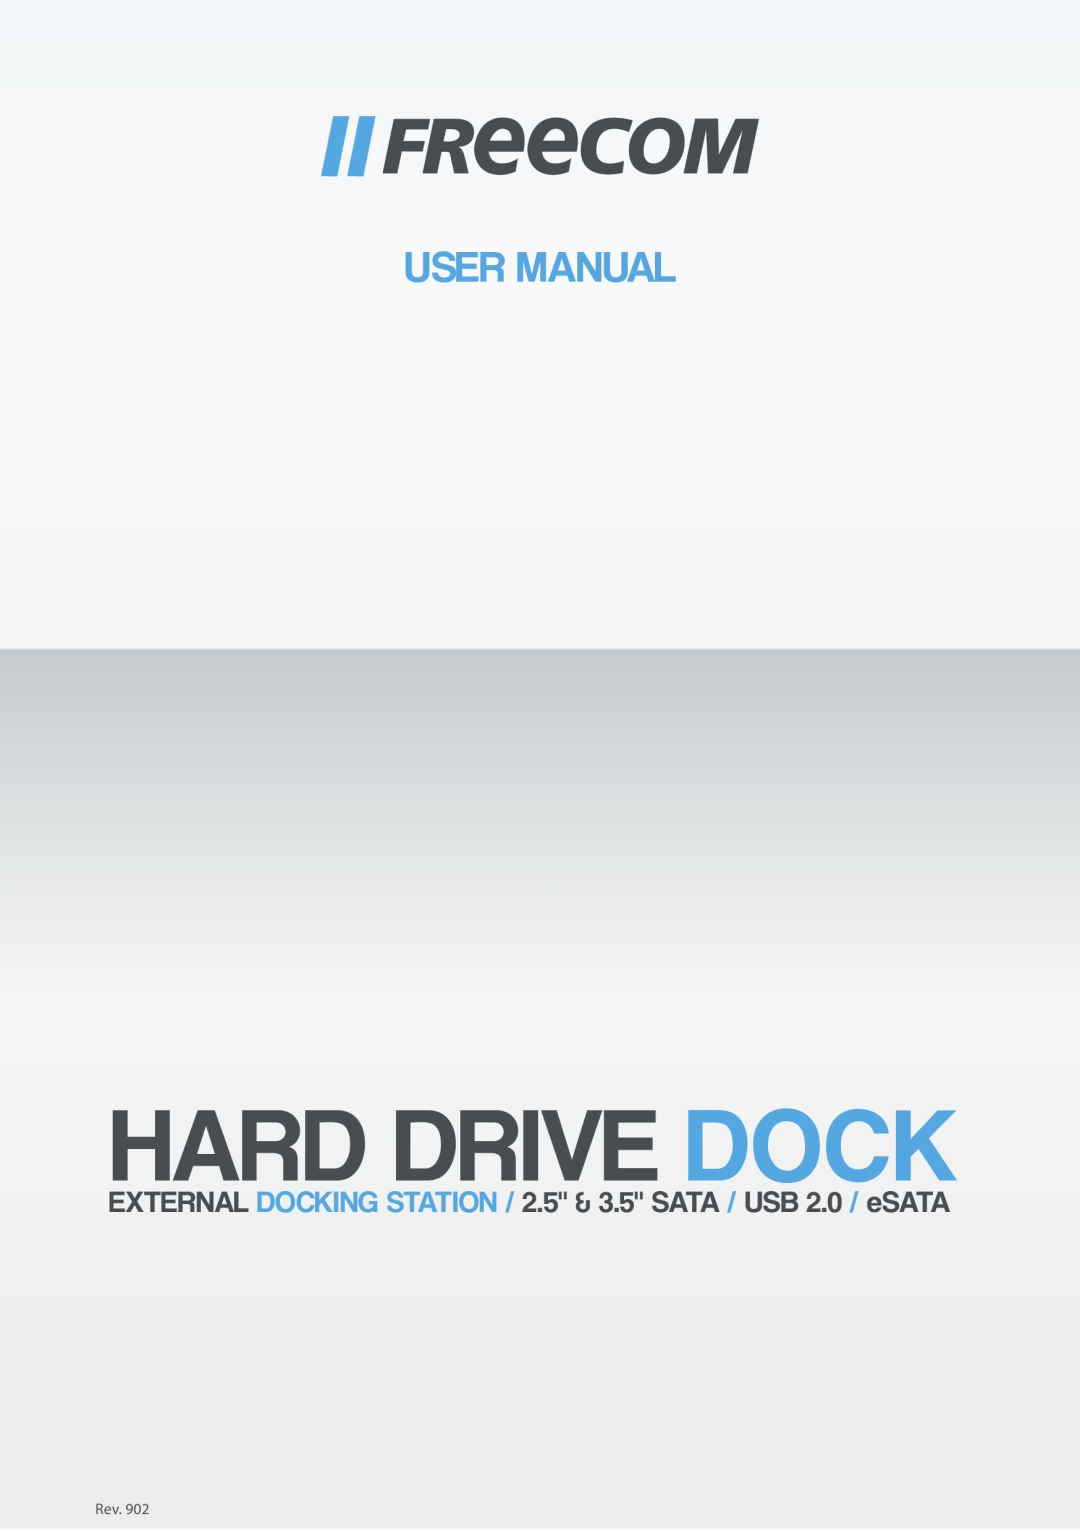 Freecom Technologies Hard Drive Dock user manual User Manual, EXTERNAL DOCKING STATION / 2.5 & 3.5 SATA / USB 2.0 / eSATA 